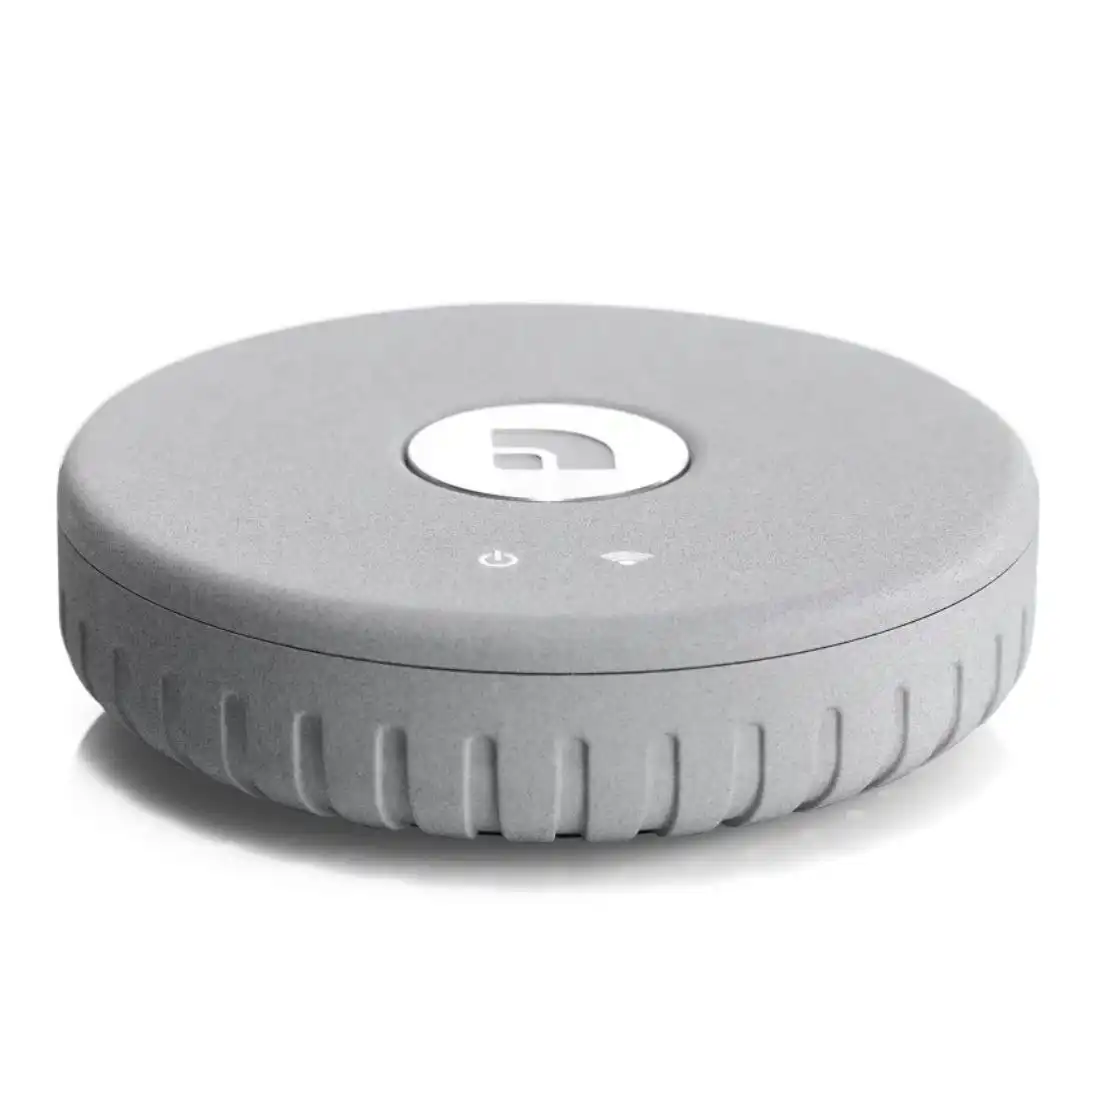 Audio Pro LINK 1 Wireless Multiroom WiFi Player - Grey